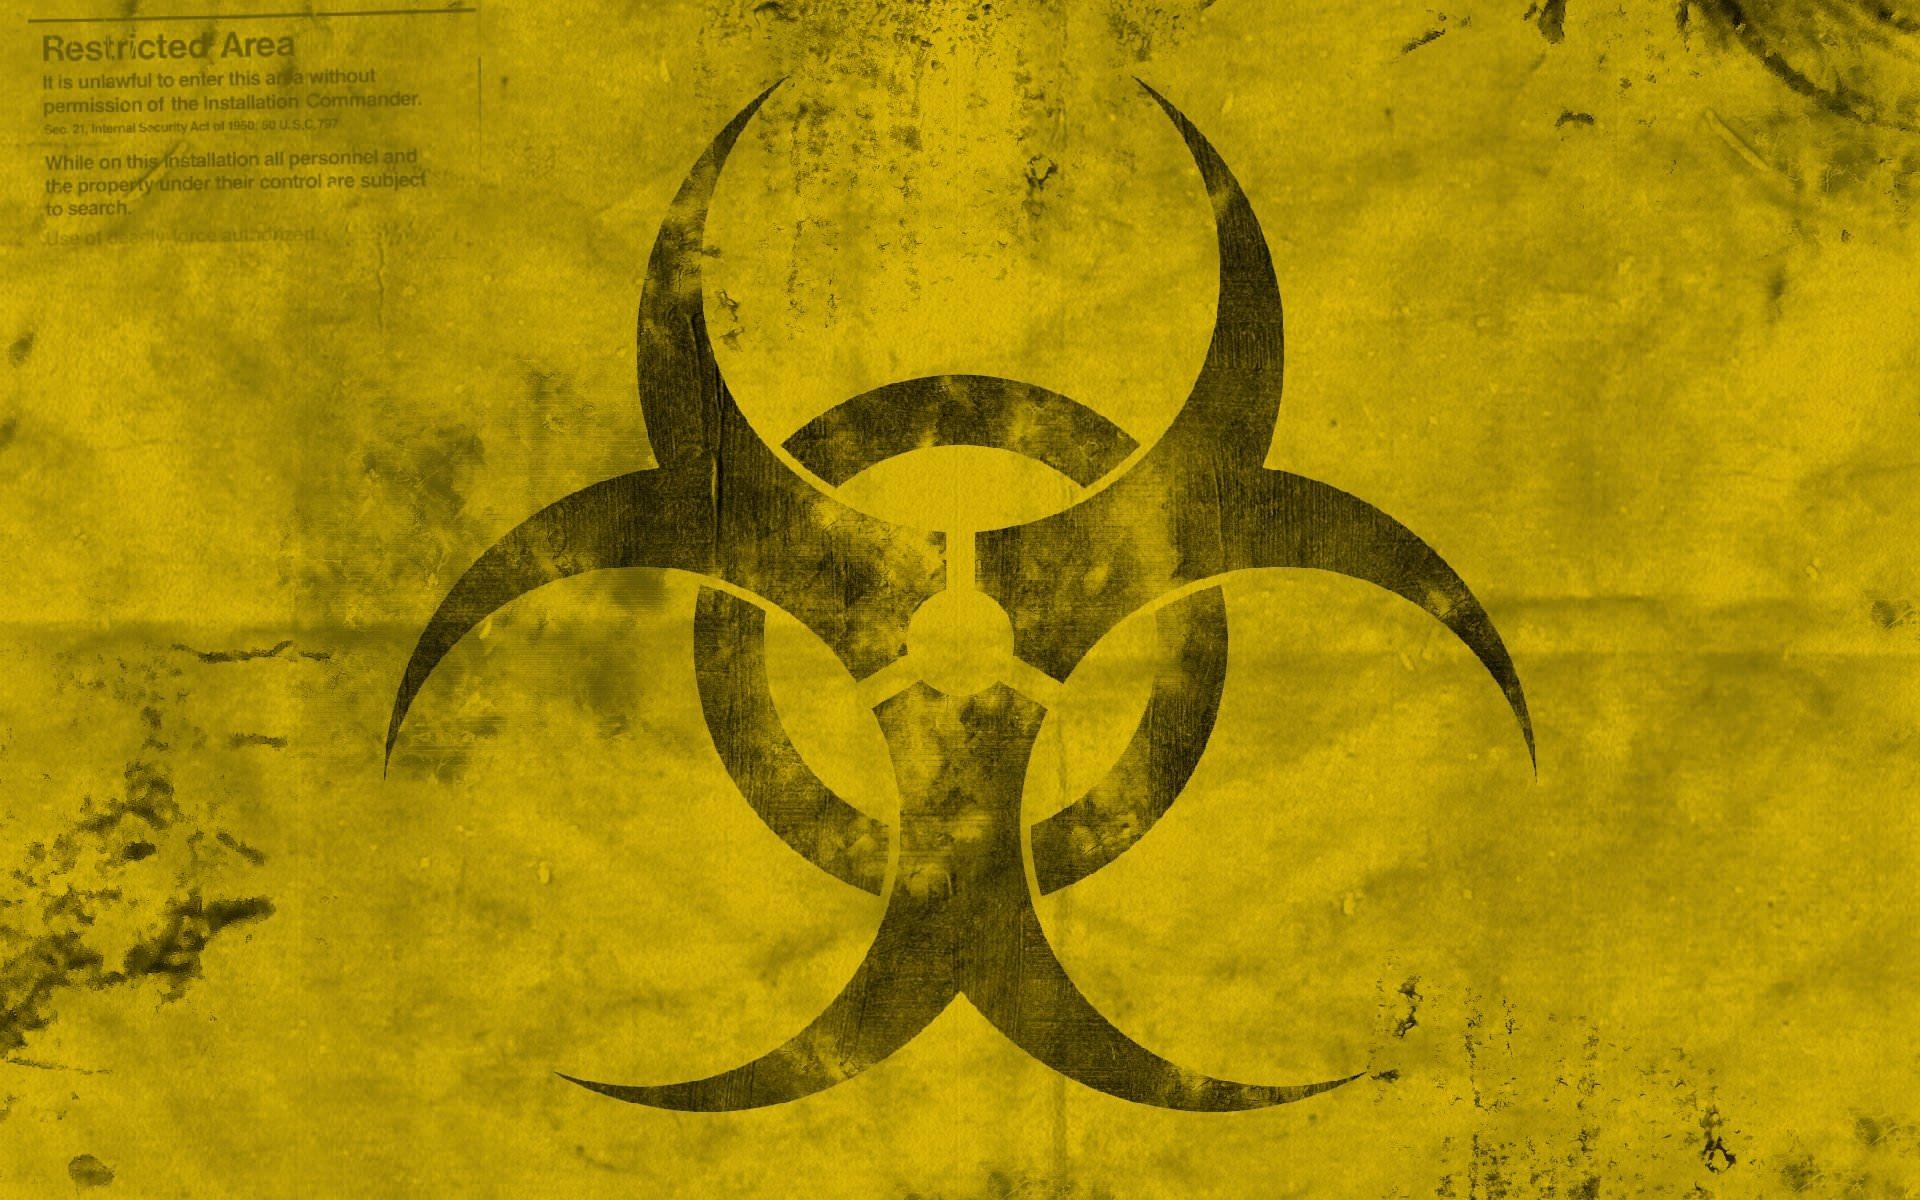 Biohazard wallpaper HD for desktop background